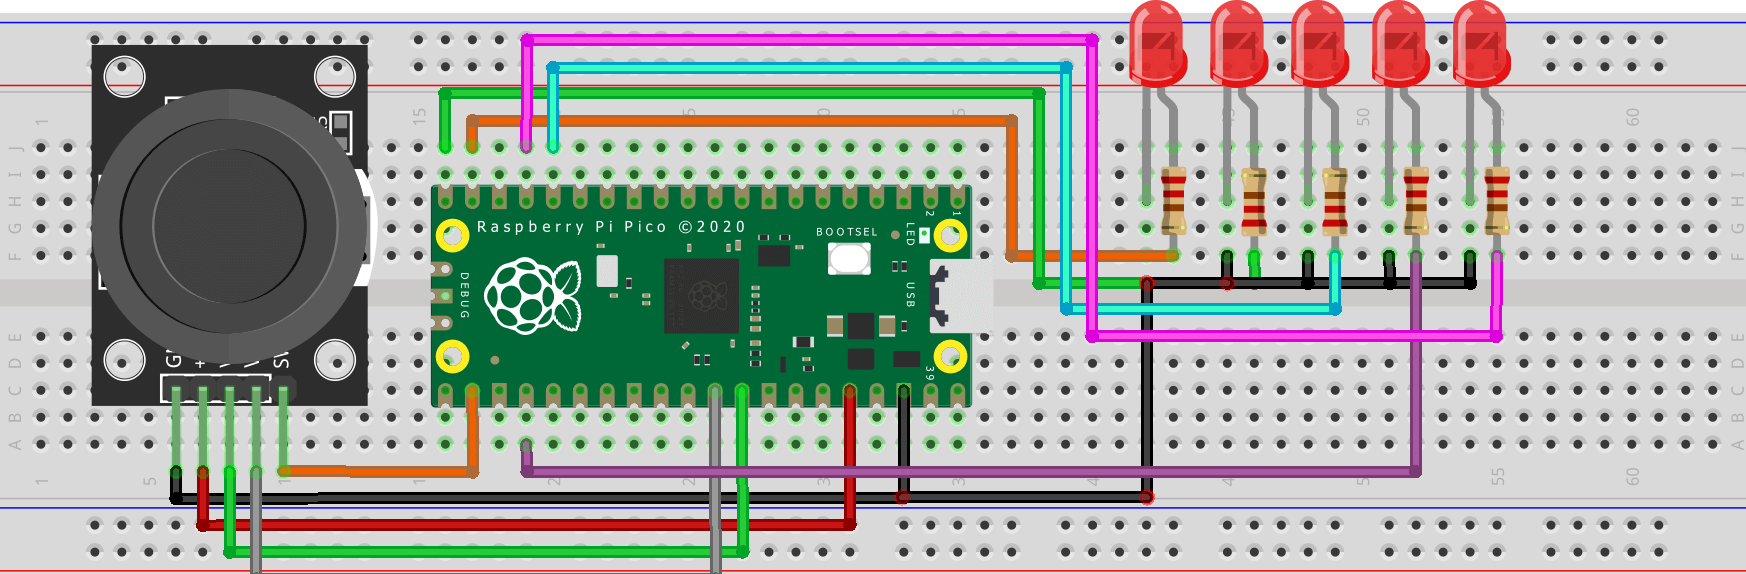 Joystick With Raspberry Pi Pico MicroPython Tutorial example 2